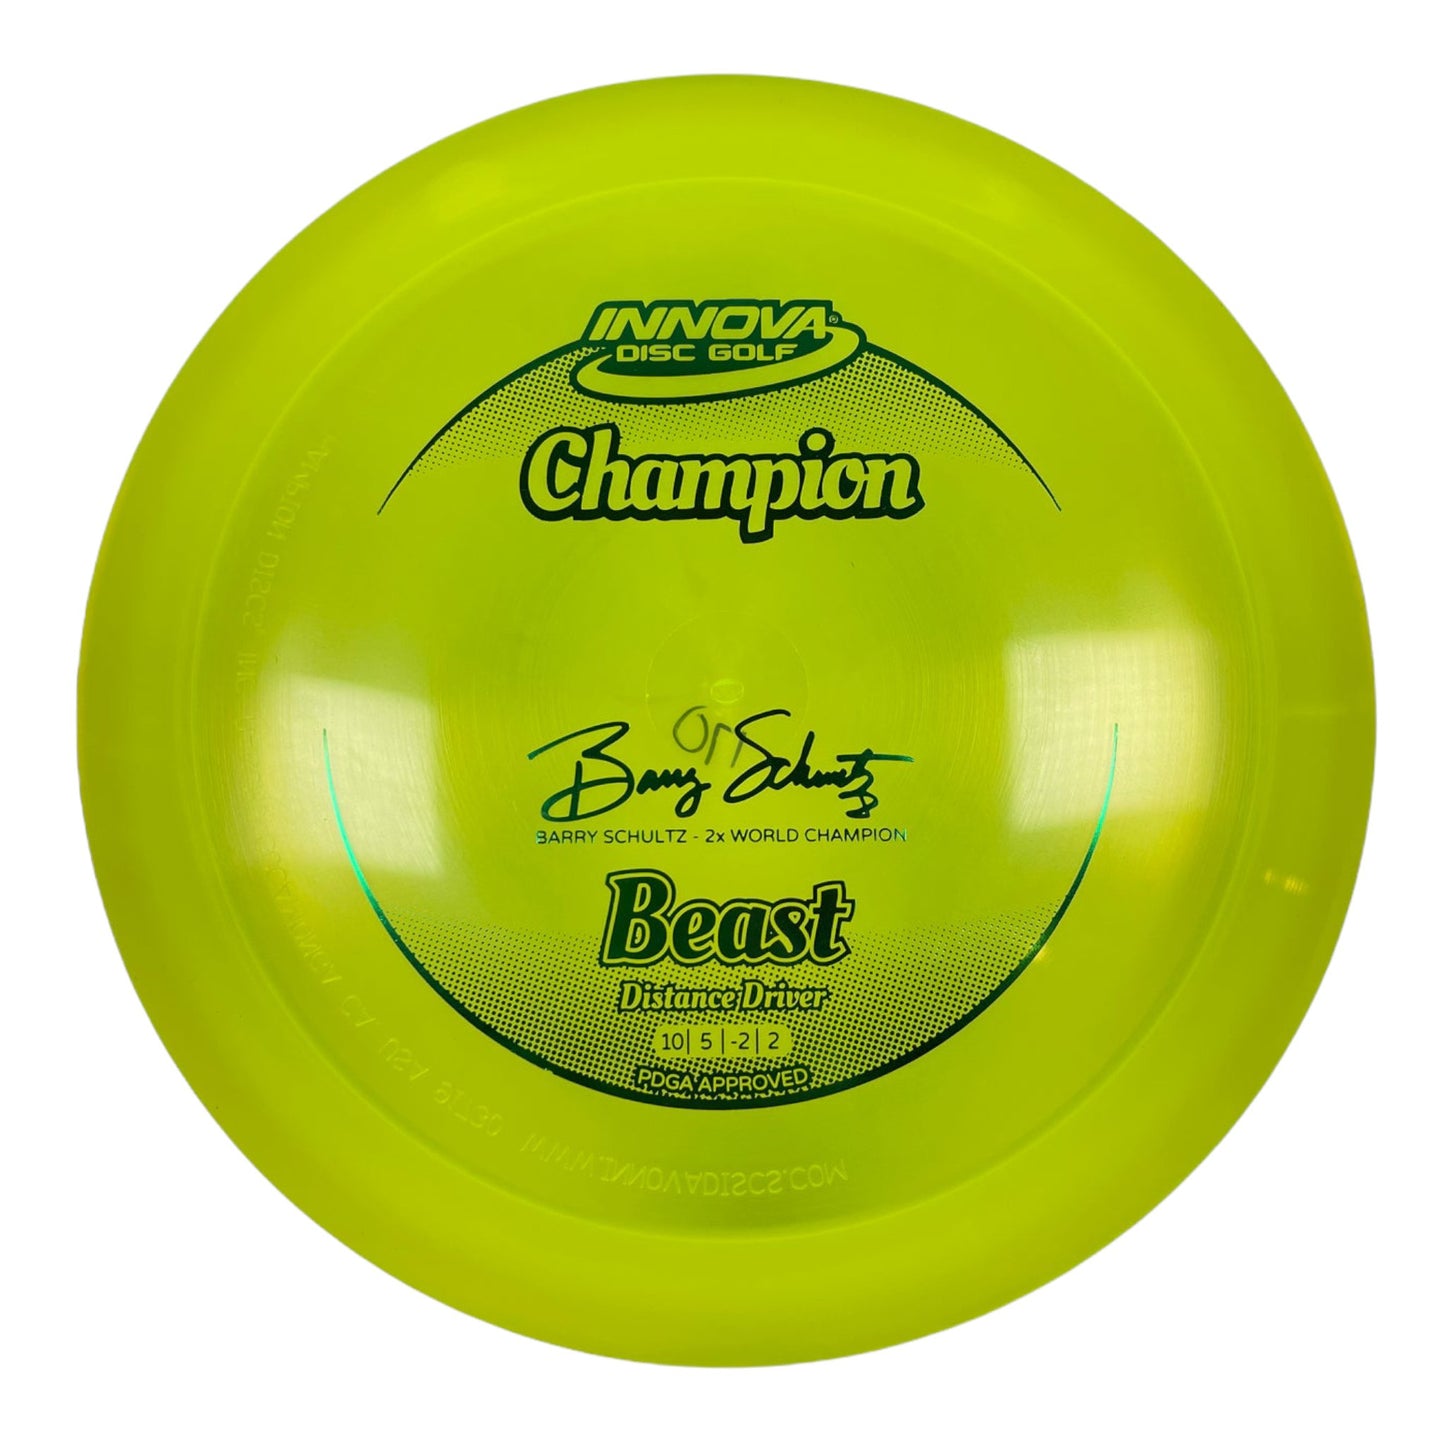 Innova Champion Discs Beast | Champion | Yellow/Green 170g Disc Golf